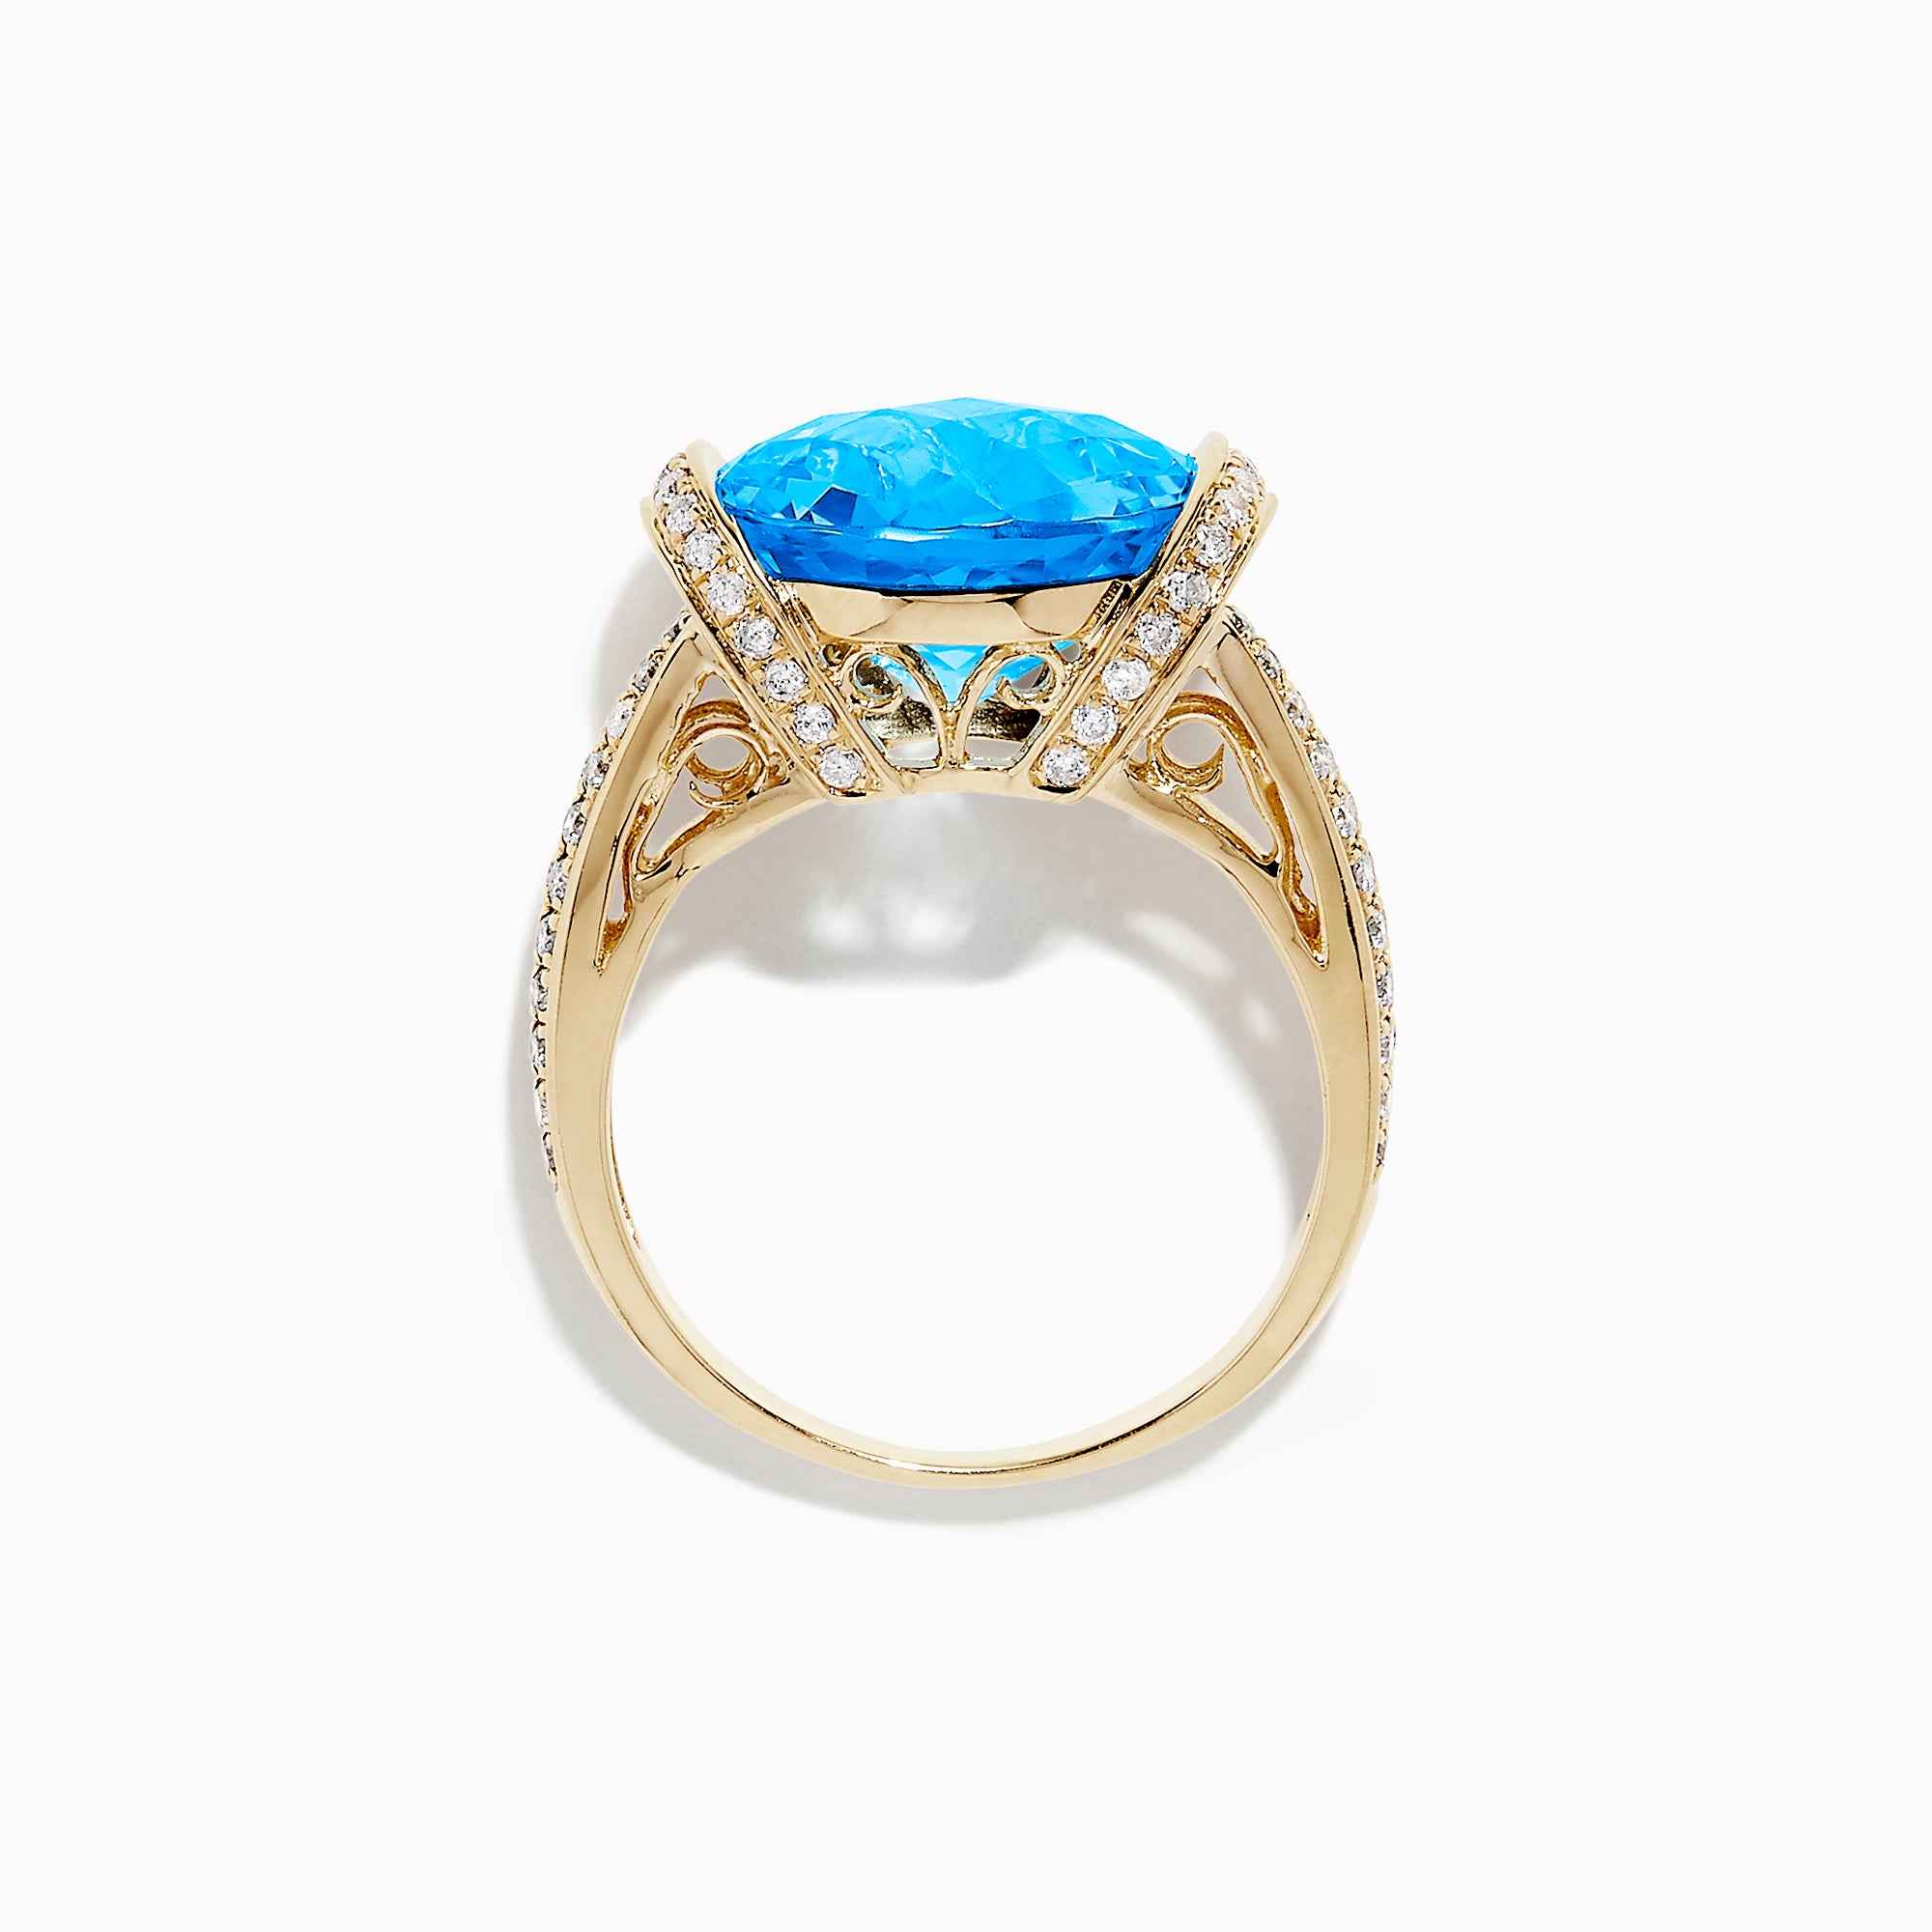 Effy Ocean Bleu 14K Yellow Gold Blue Topaz and Diamond Ring, 6.88 TCW